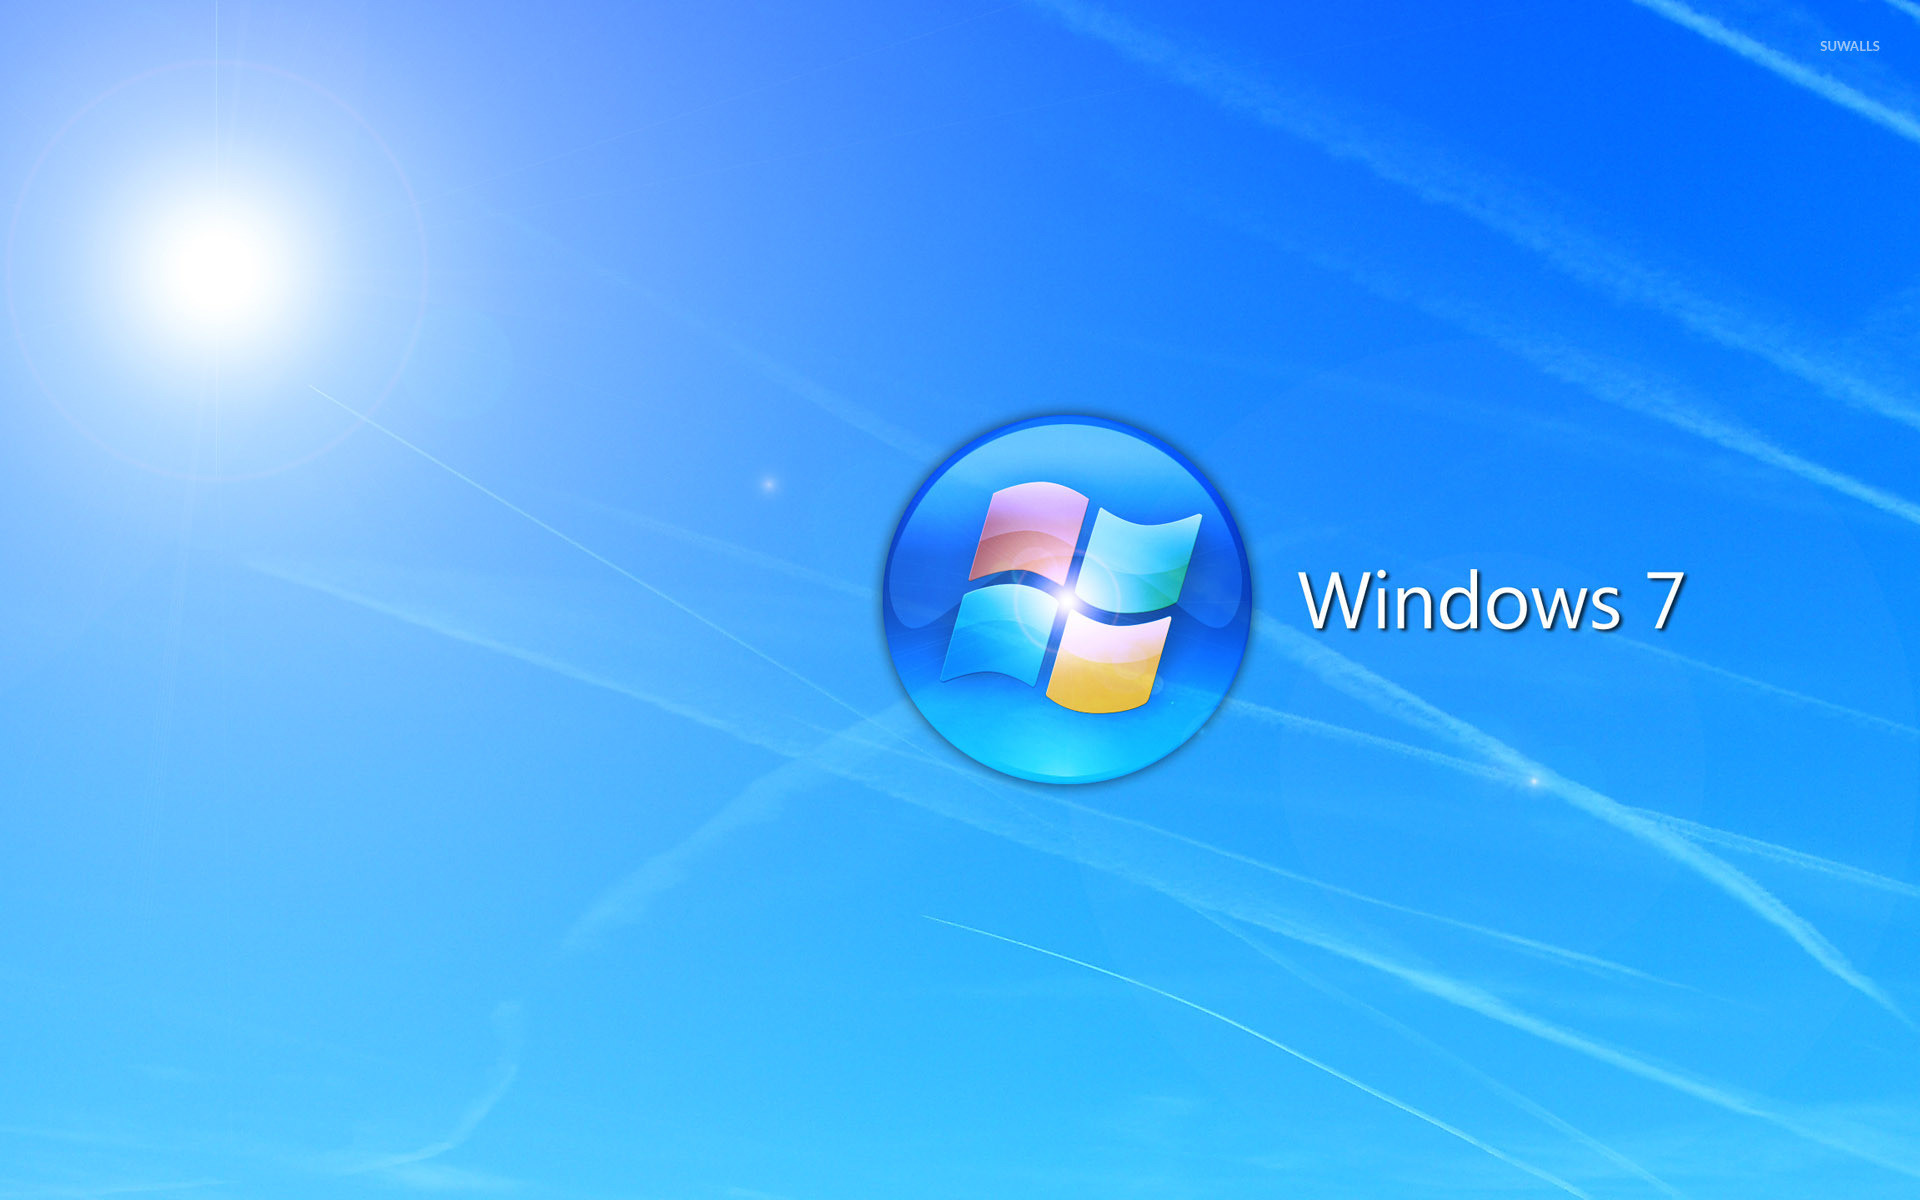 Blue Windows 7 logo circle wallpaper